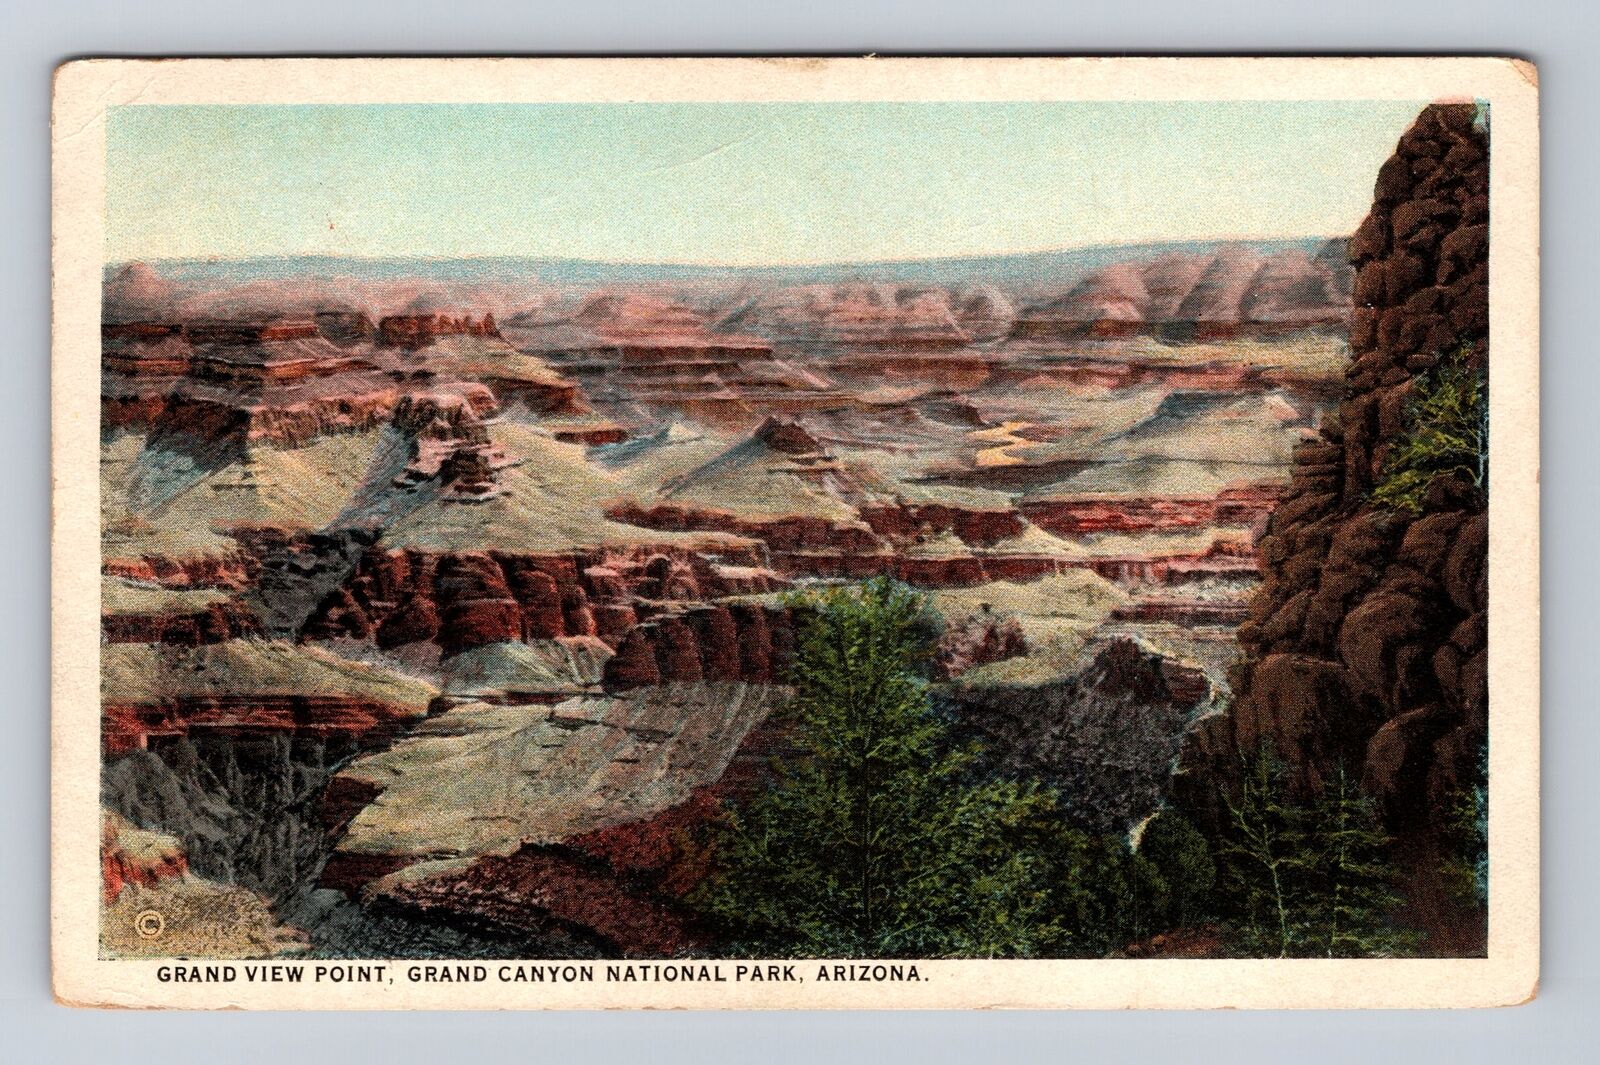 Grand Canyon National Park-Grand View Point, Antique Vintage c1930 Postcard